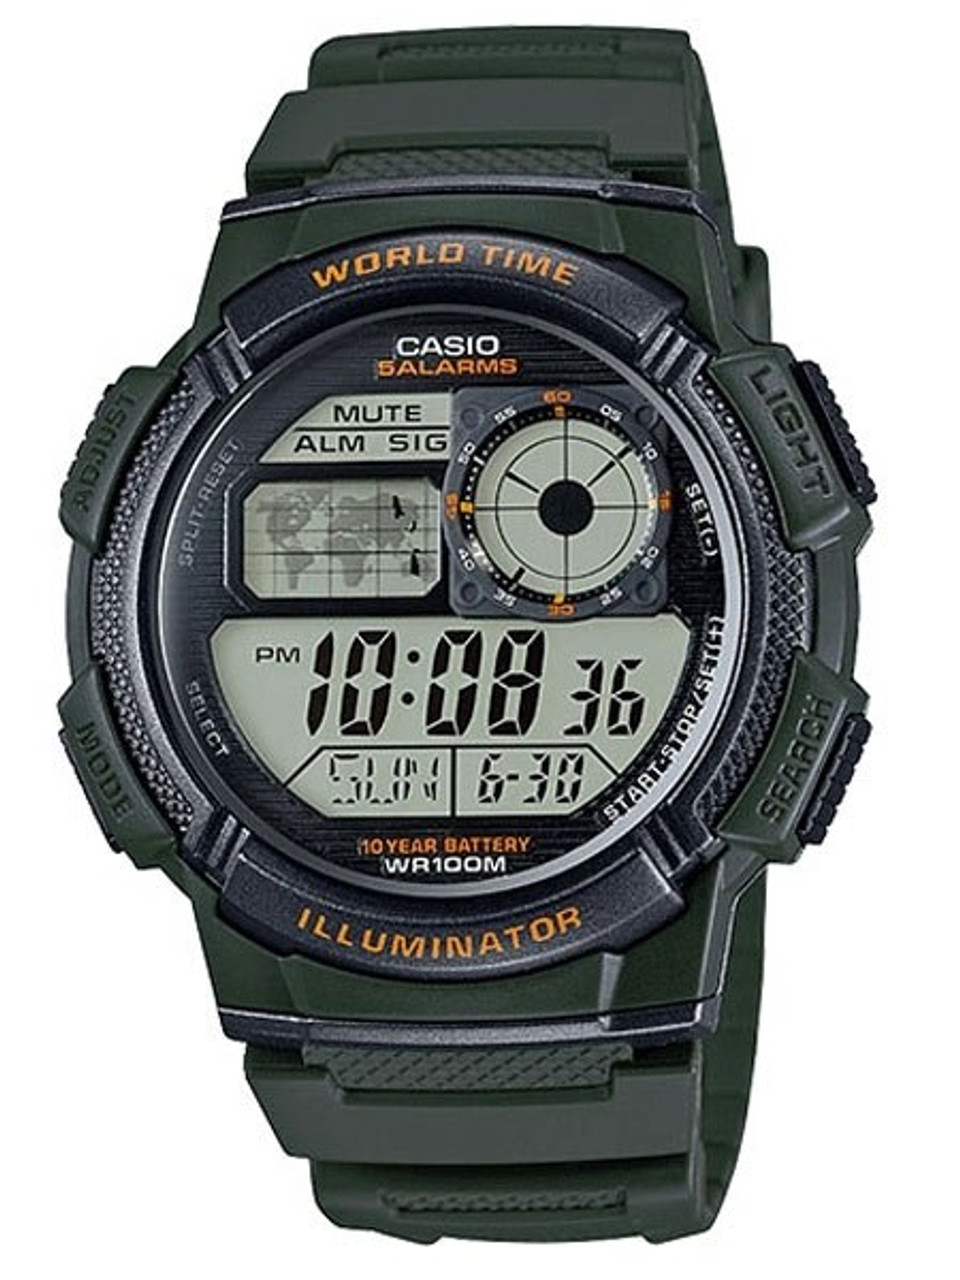 Casio Illuminator World Timel Alarm Watch with 31 Time Zones #AE-1000W-3AV